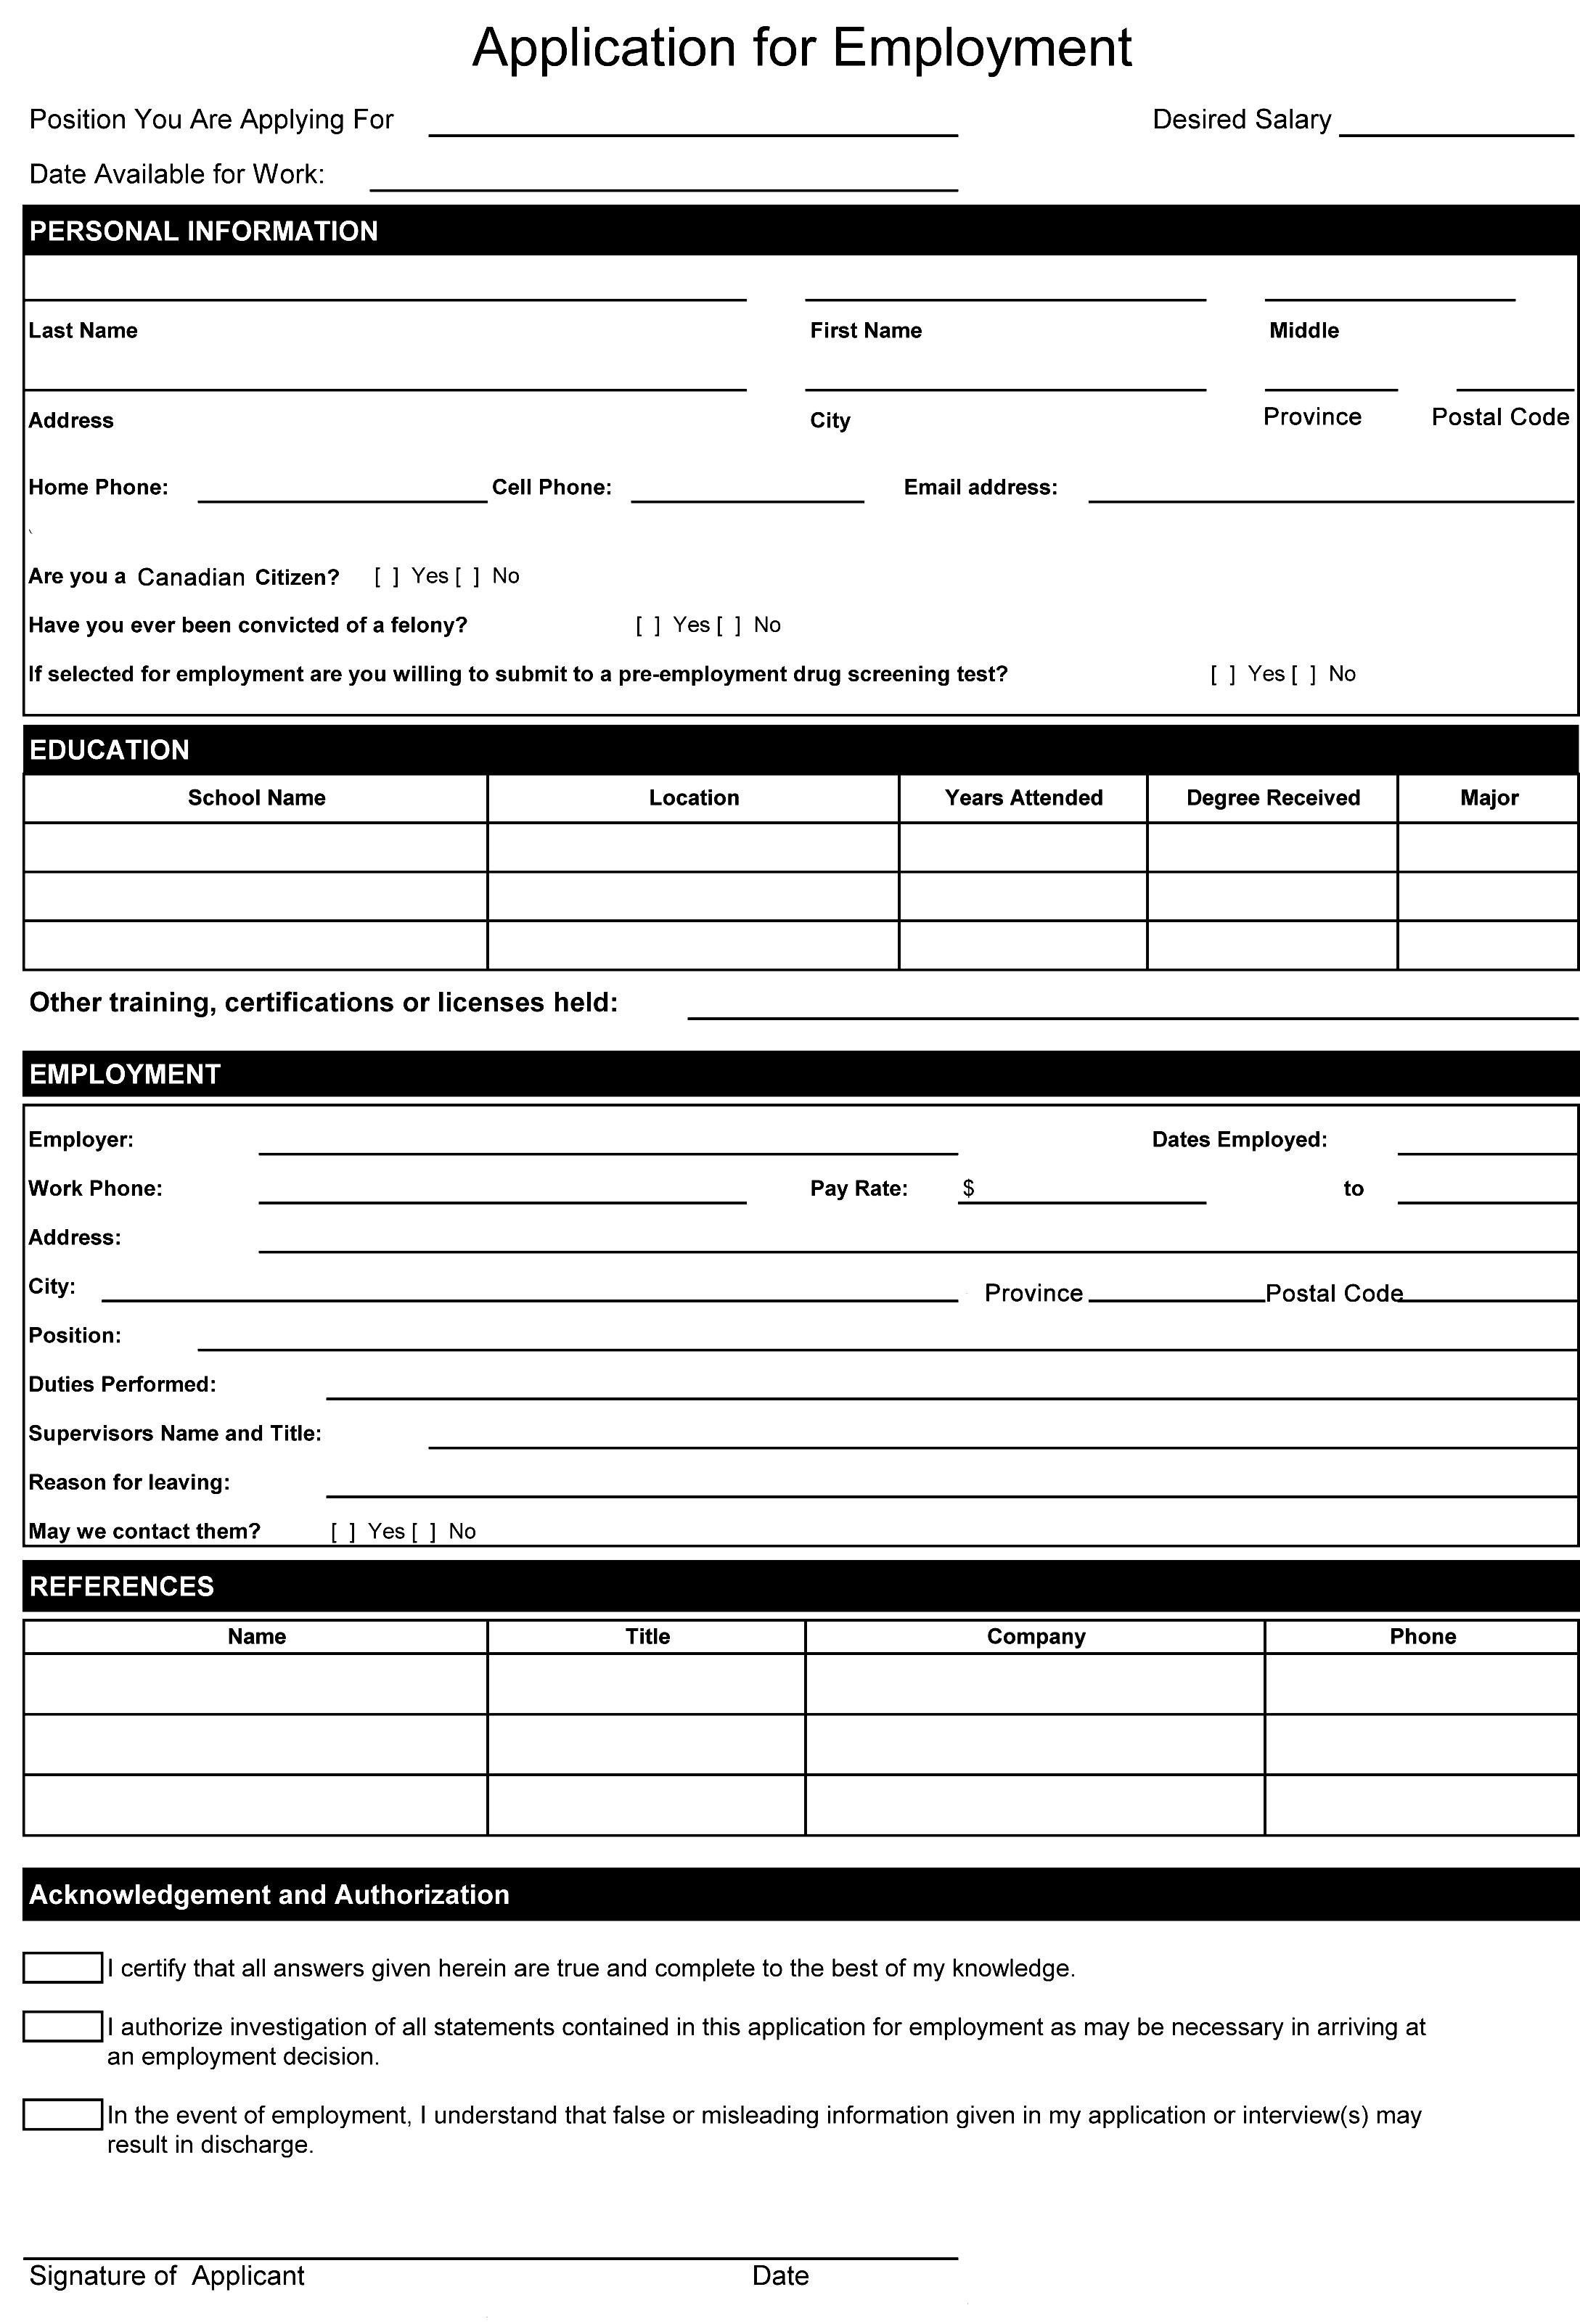 Resume Format Word Document | Resume Format | Job Application Form - Application For Employment Form Free Printable